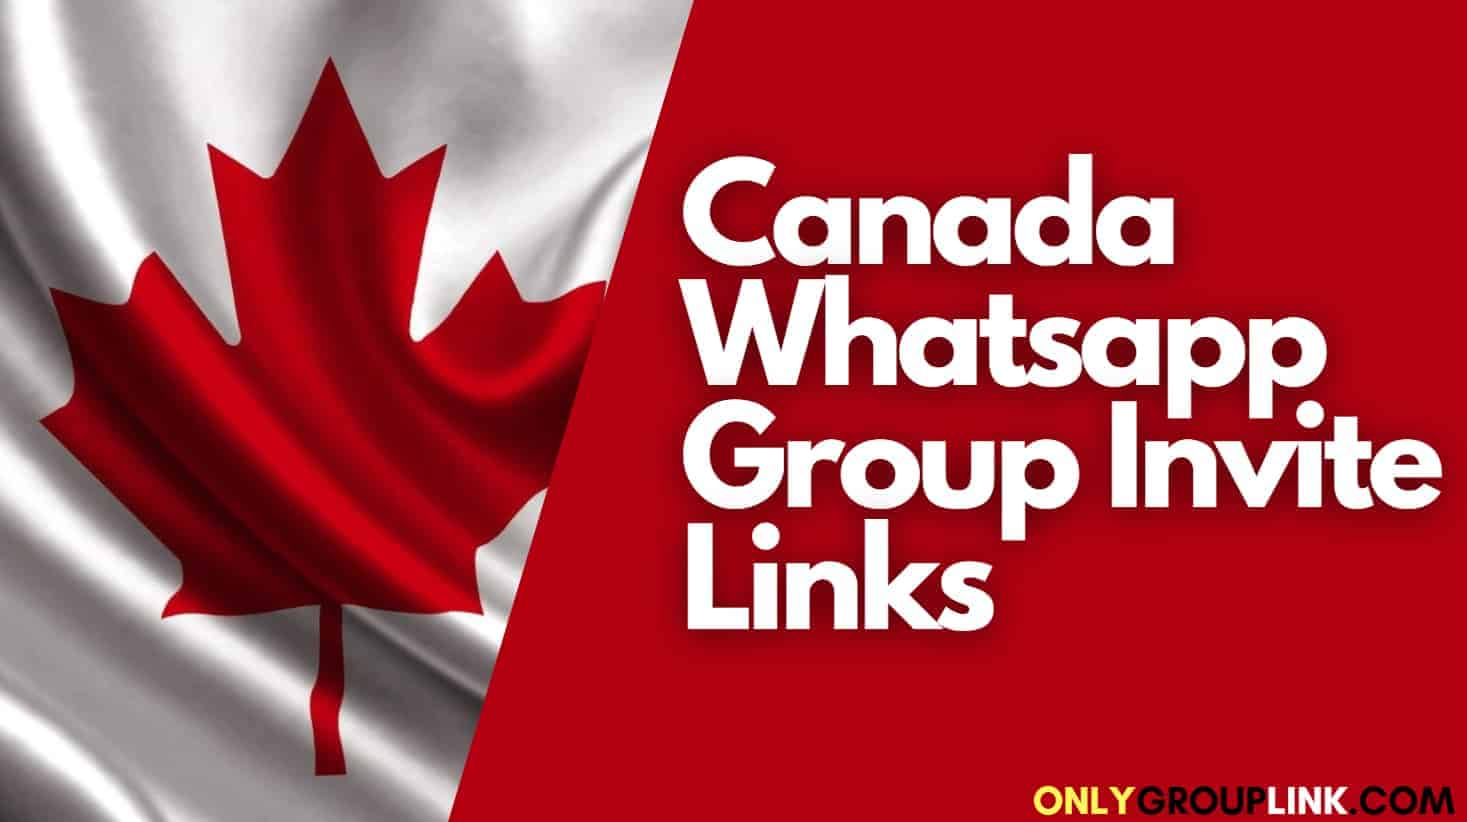 Canada Whatsapp Group Links